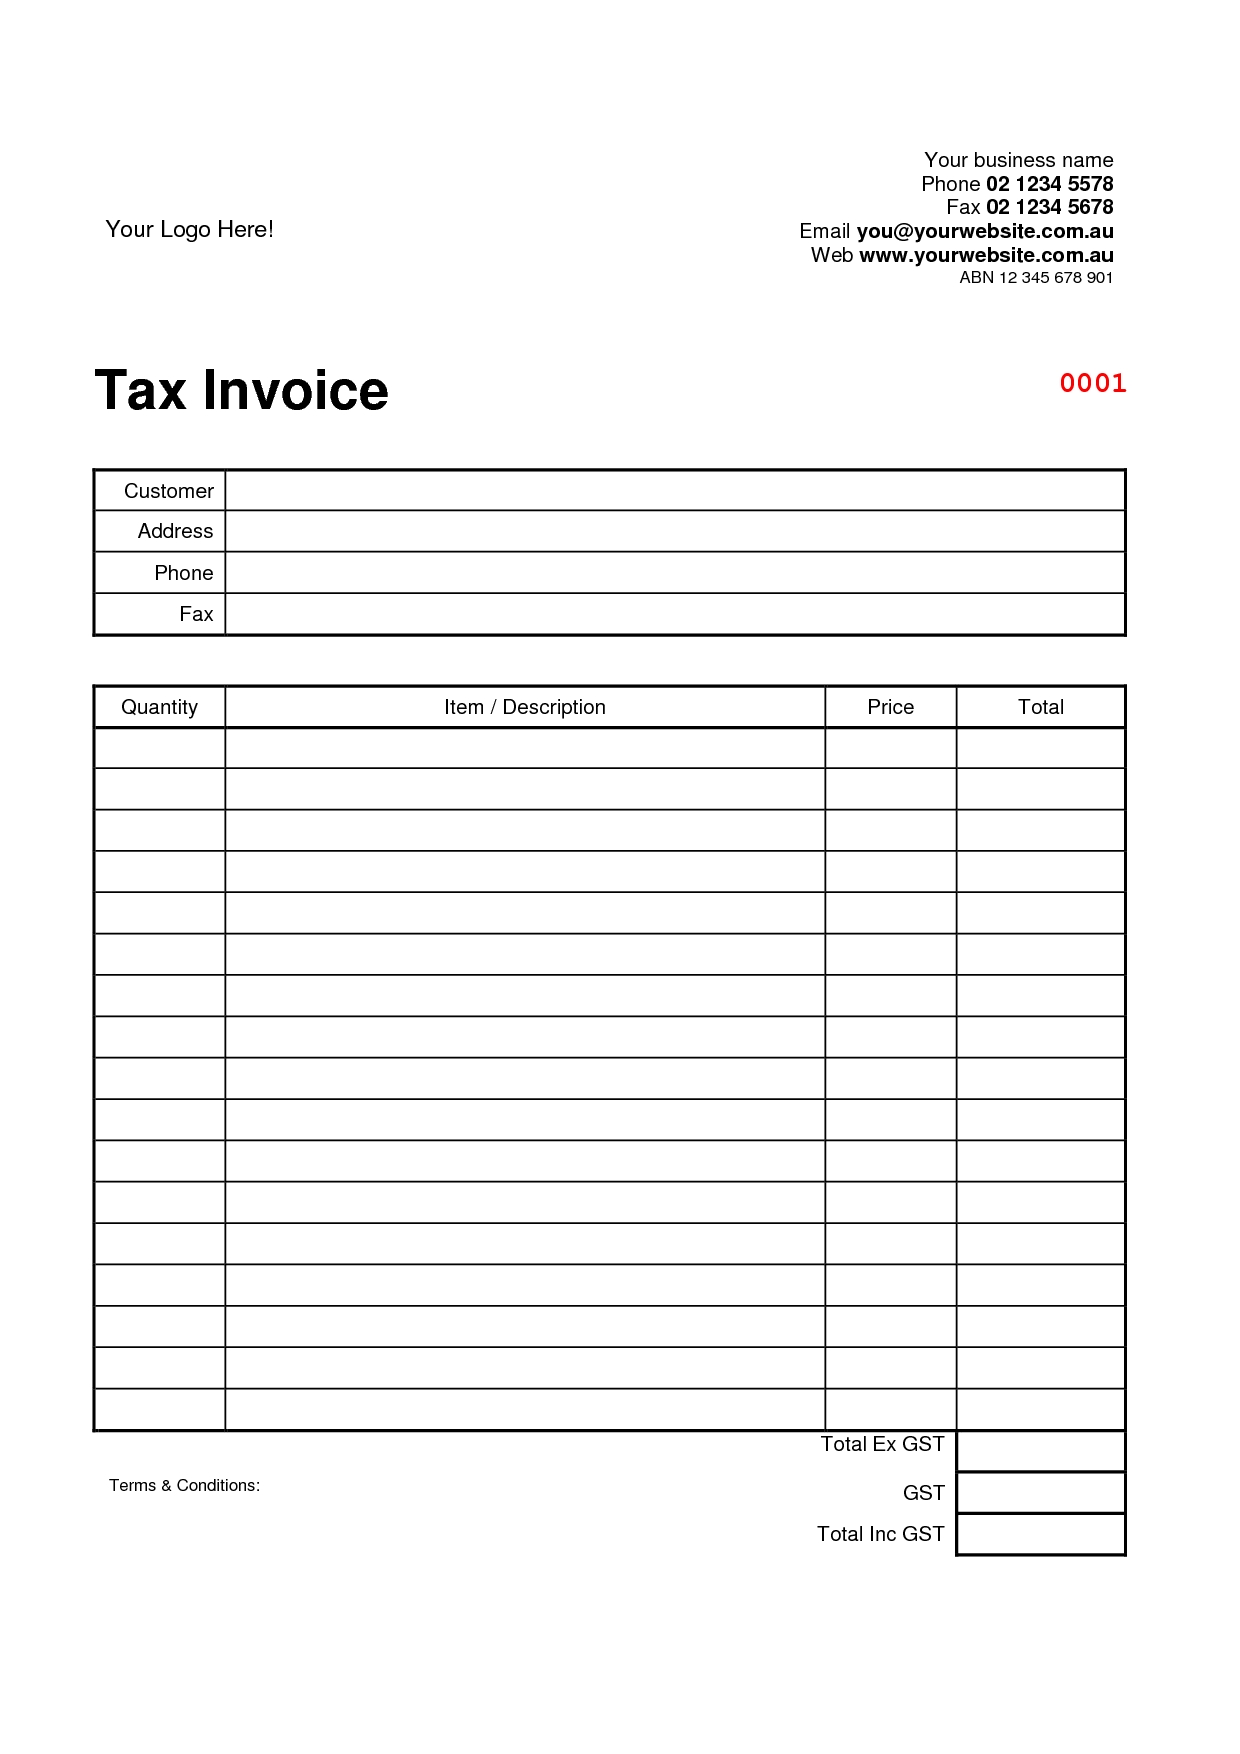 tax invoice template word australia firmsinja australian invoice template word